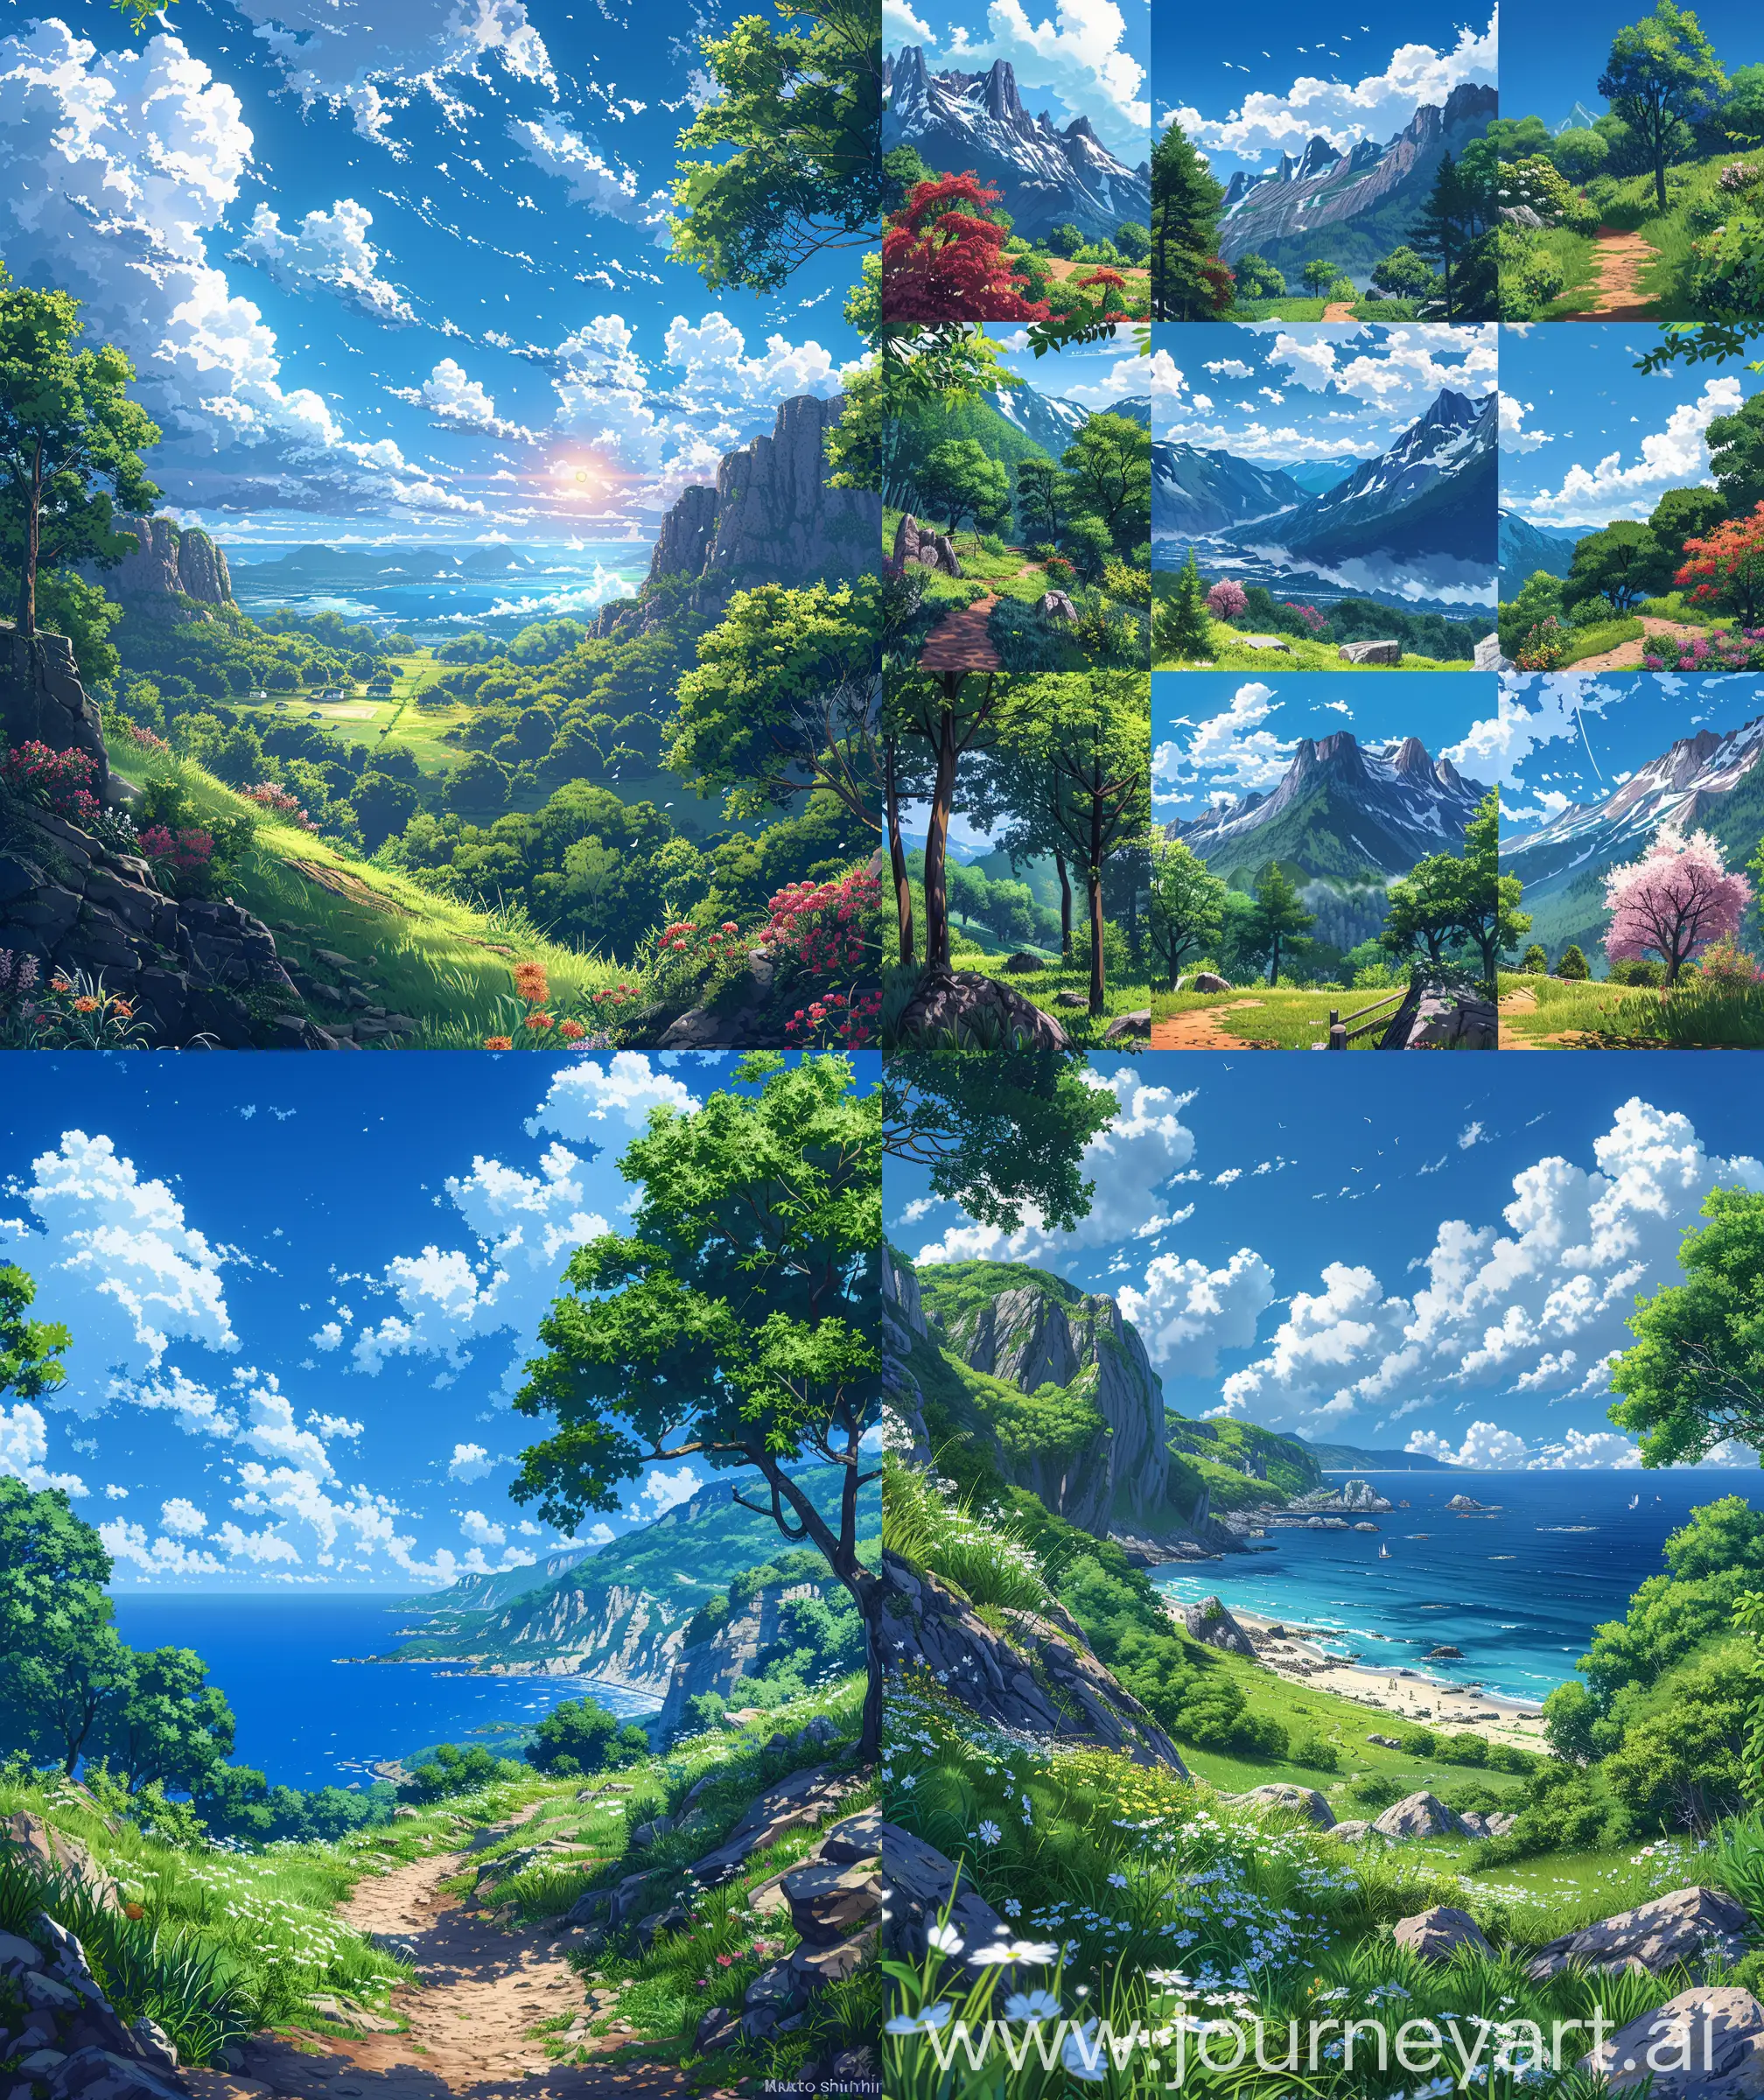 Tranquil-Anime-Scenery-Summer-Nature-Scenes-in-Makoto-Shinkai-Style